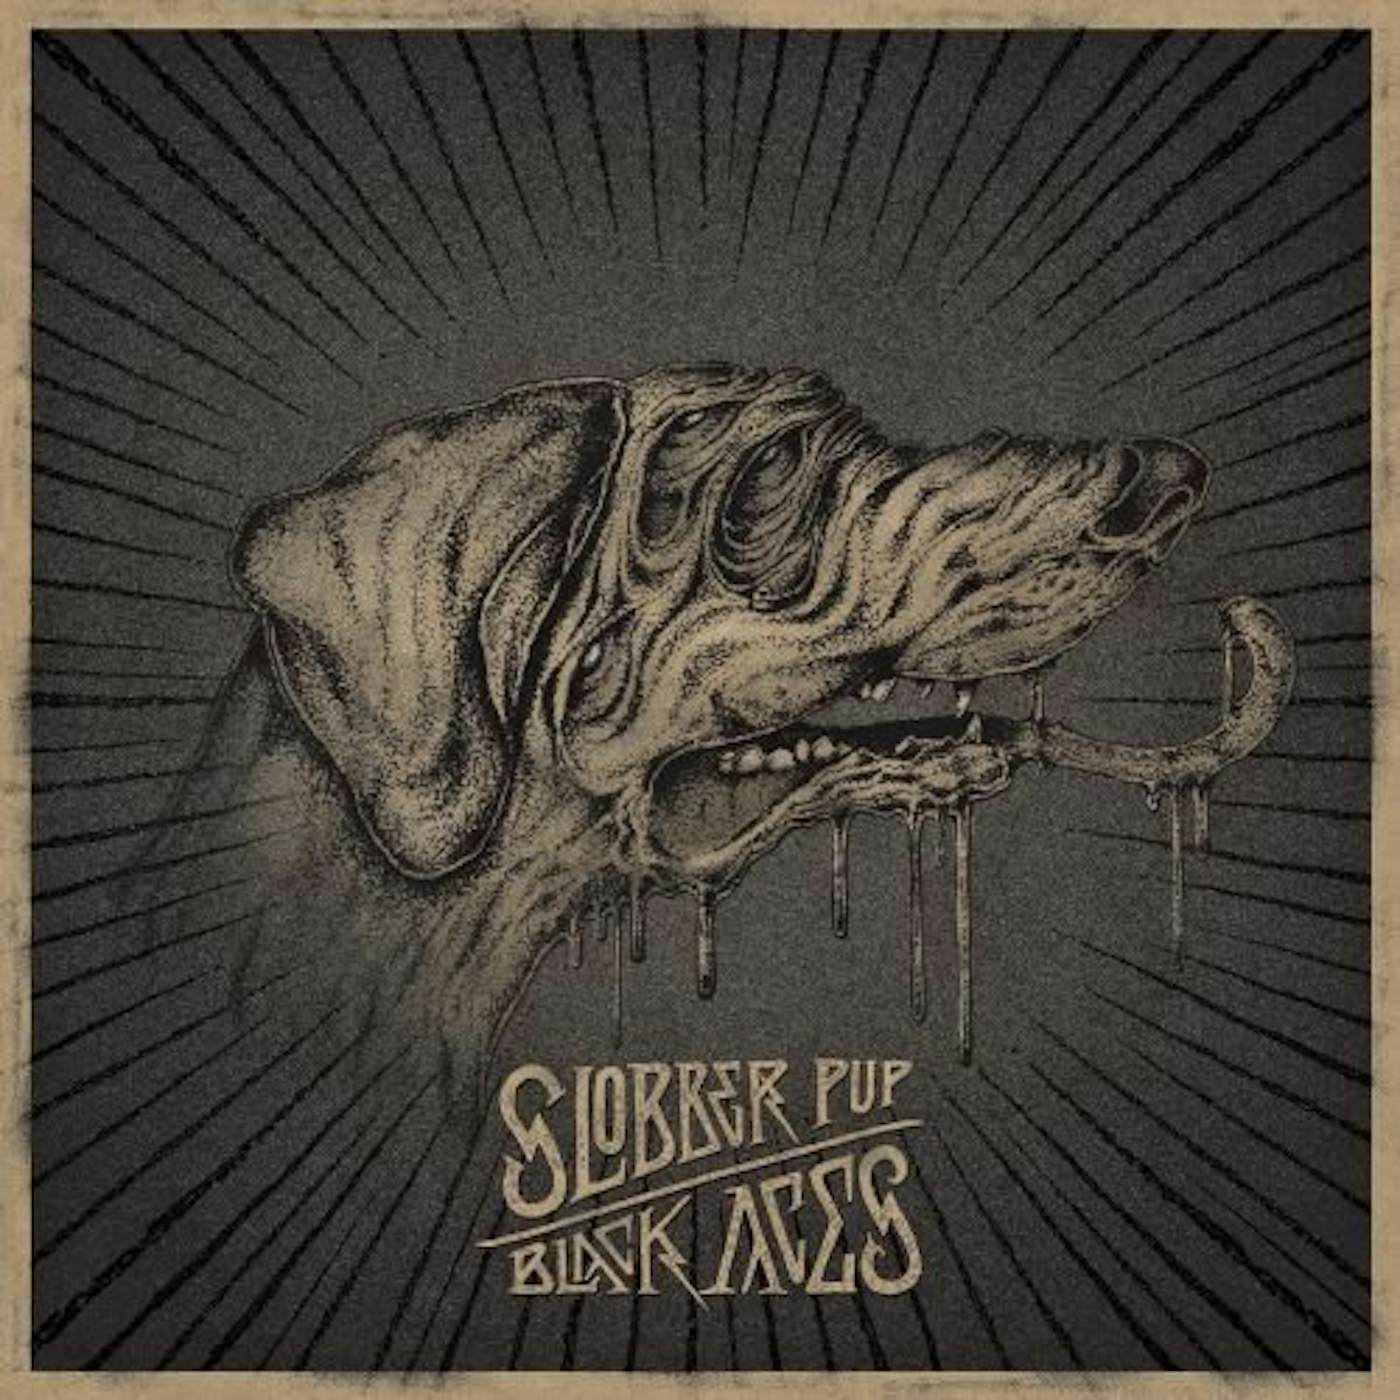 Slobber Pup Black Aces Vinyl Record